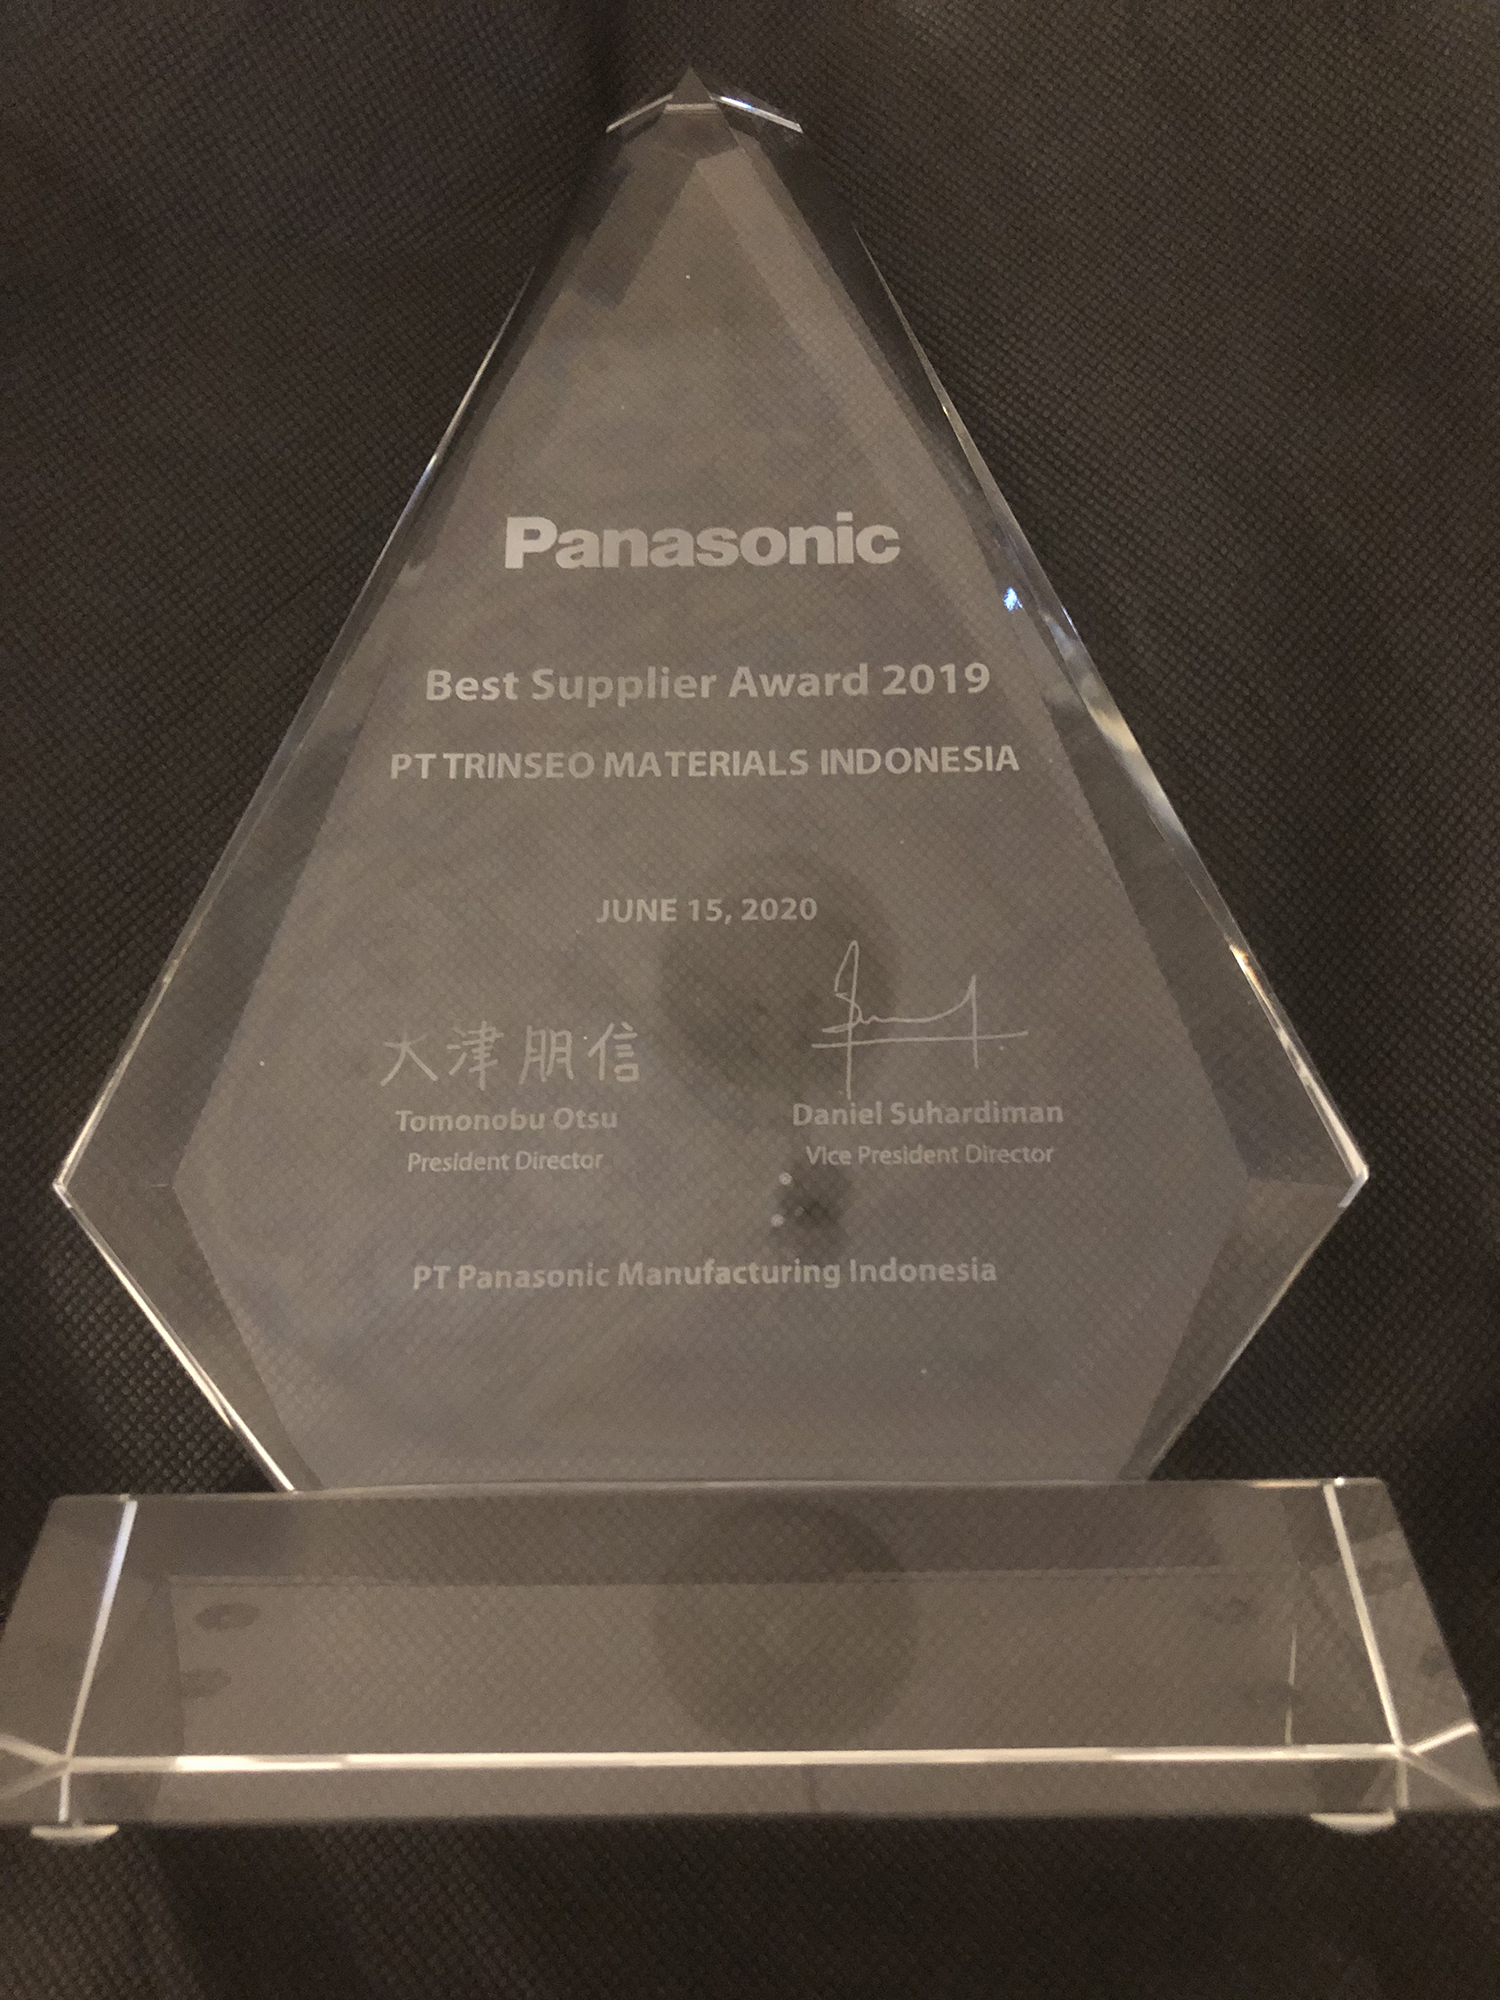 Panasonic Supplier Award